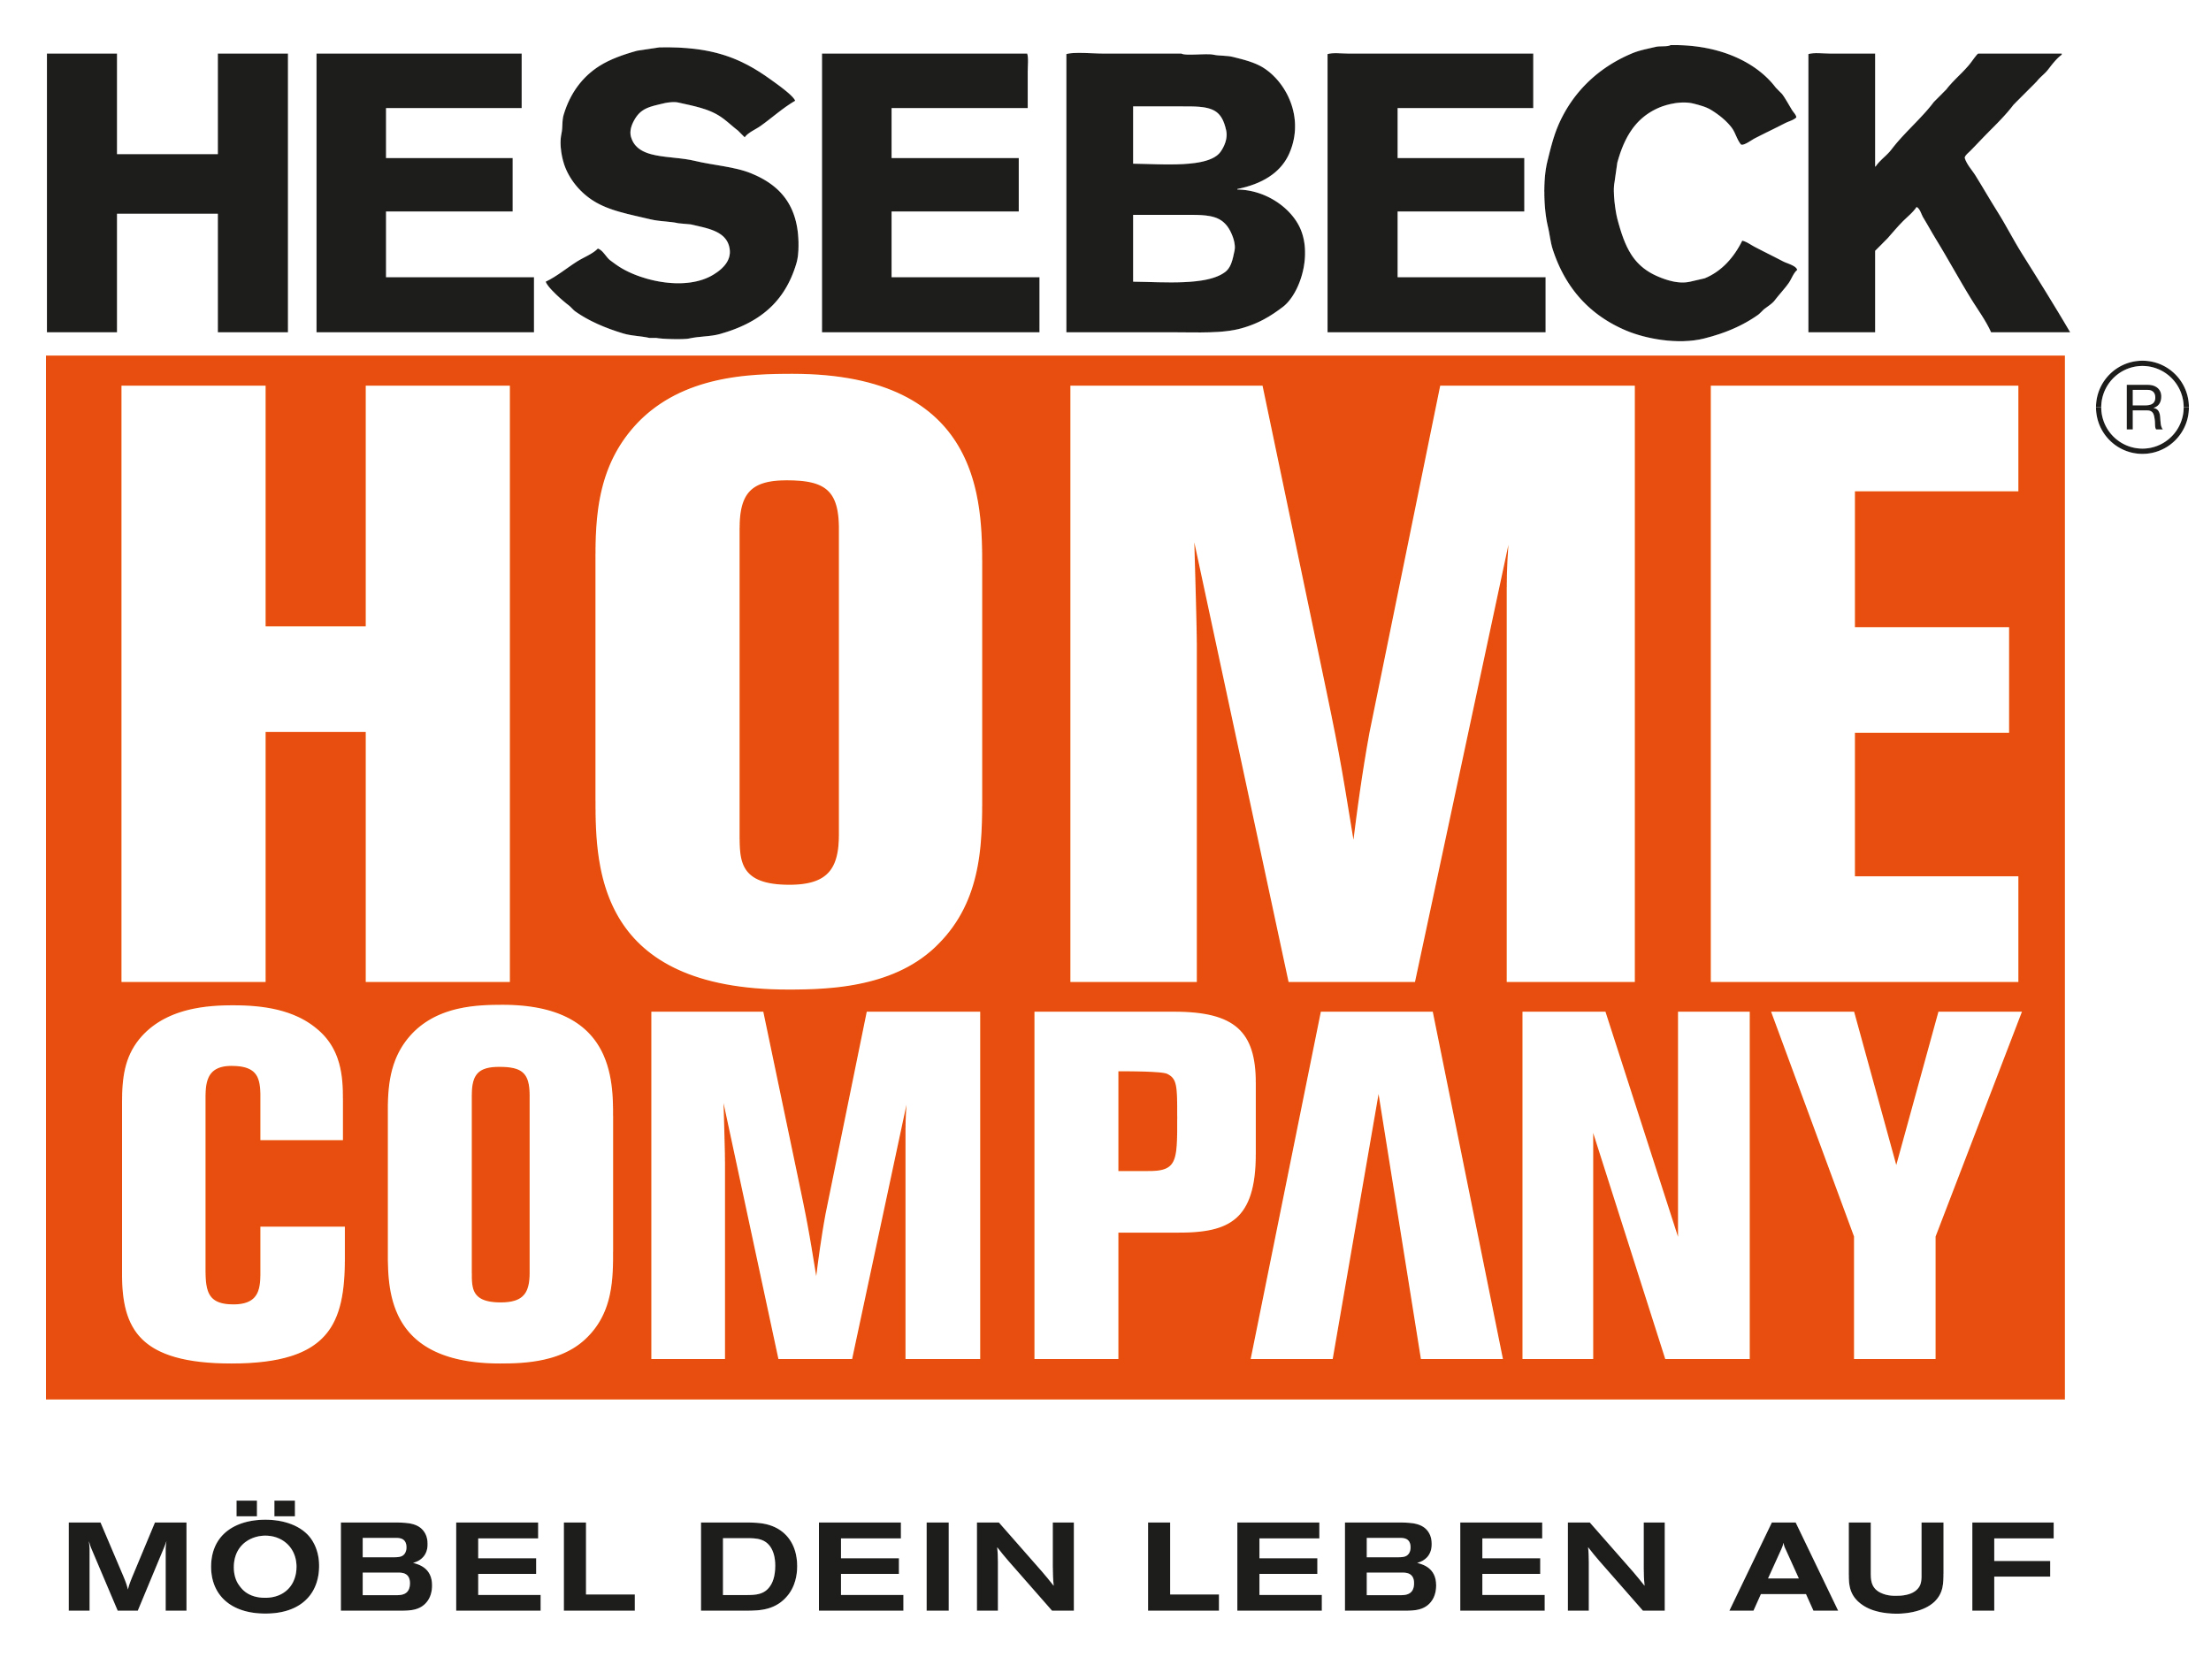 Bild 19 Hesebeck Home Company GmbH & Co. KG in Henstedt-Ulzburg